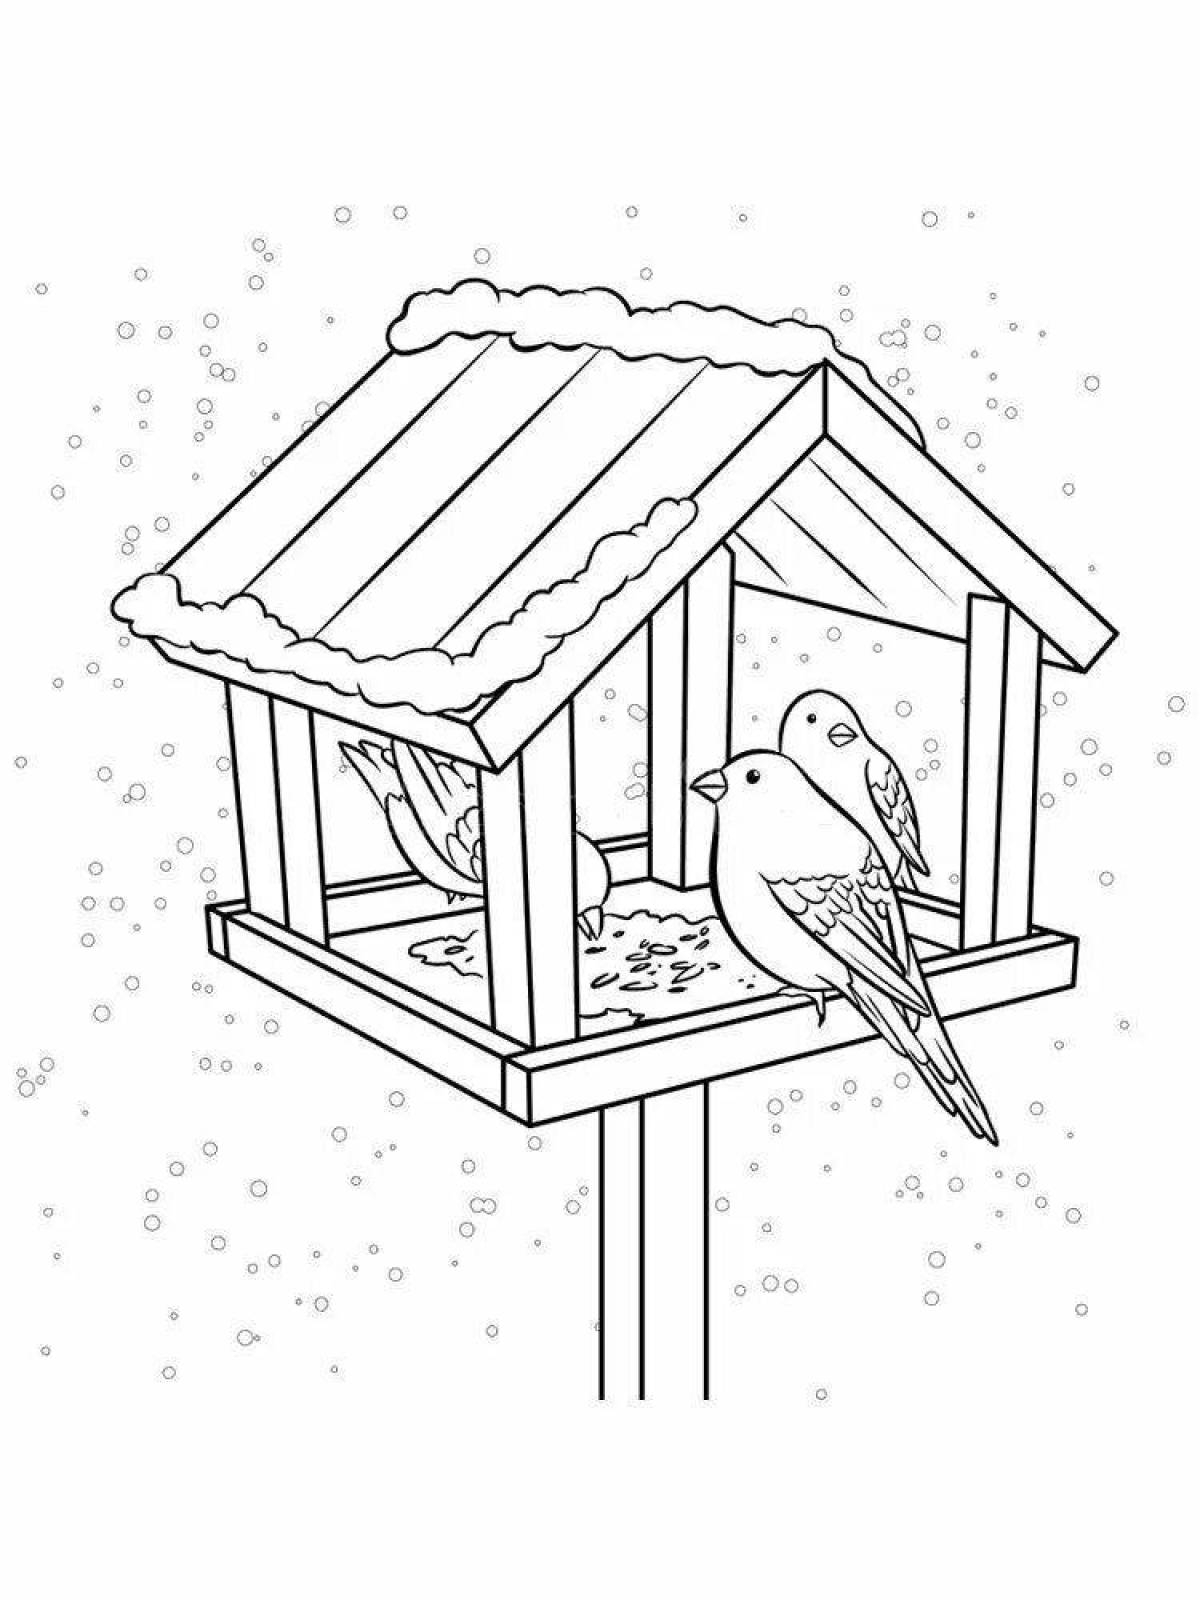 Birds at the feeder in winter #6